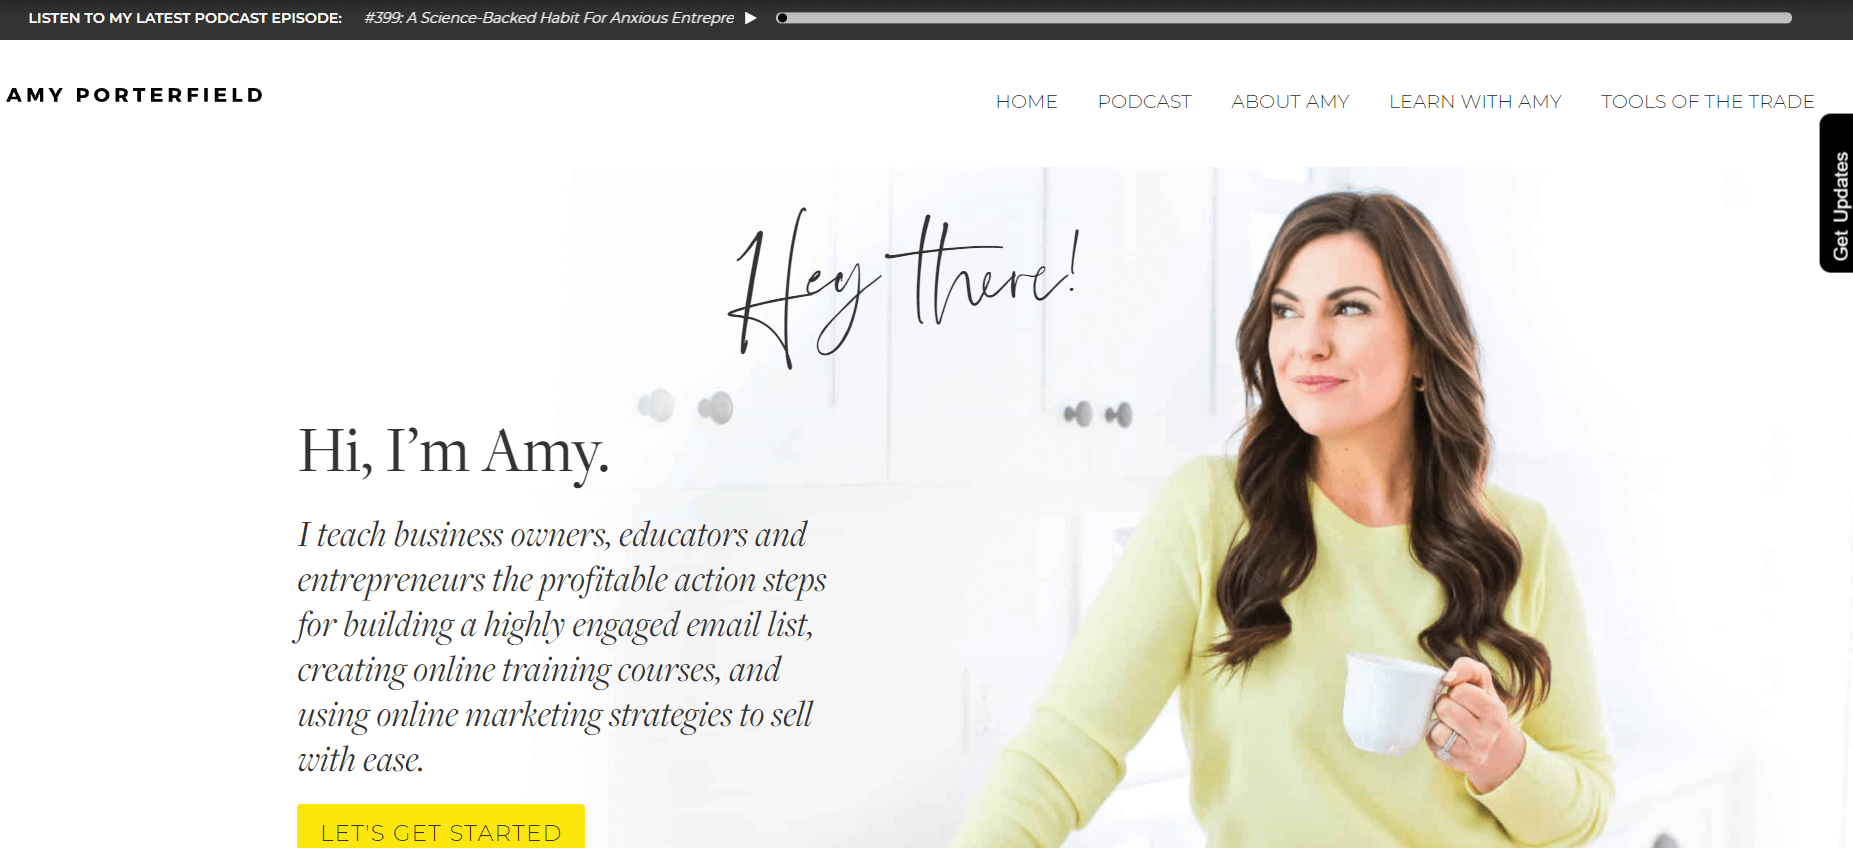 A screenshot showing Amy Porterfield's website